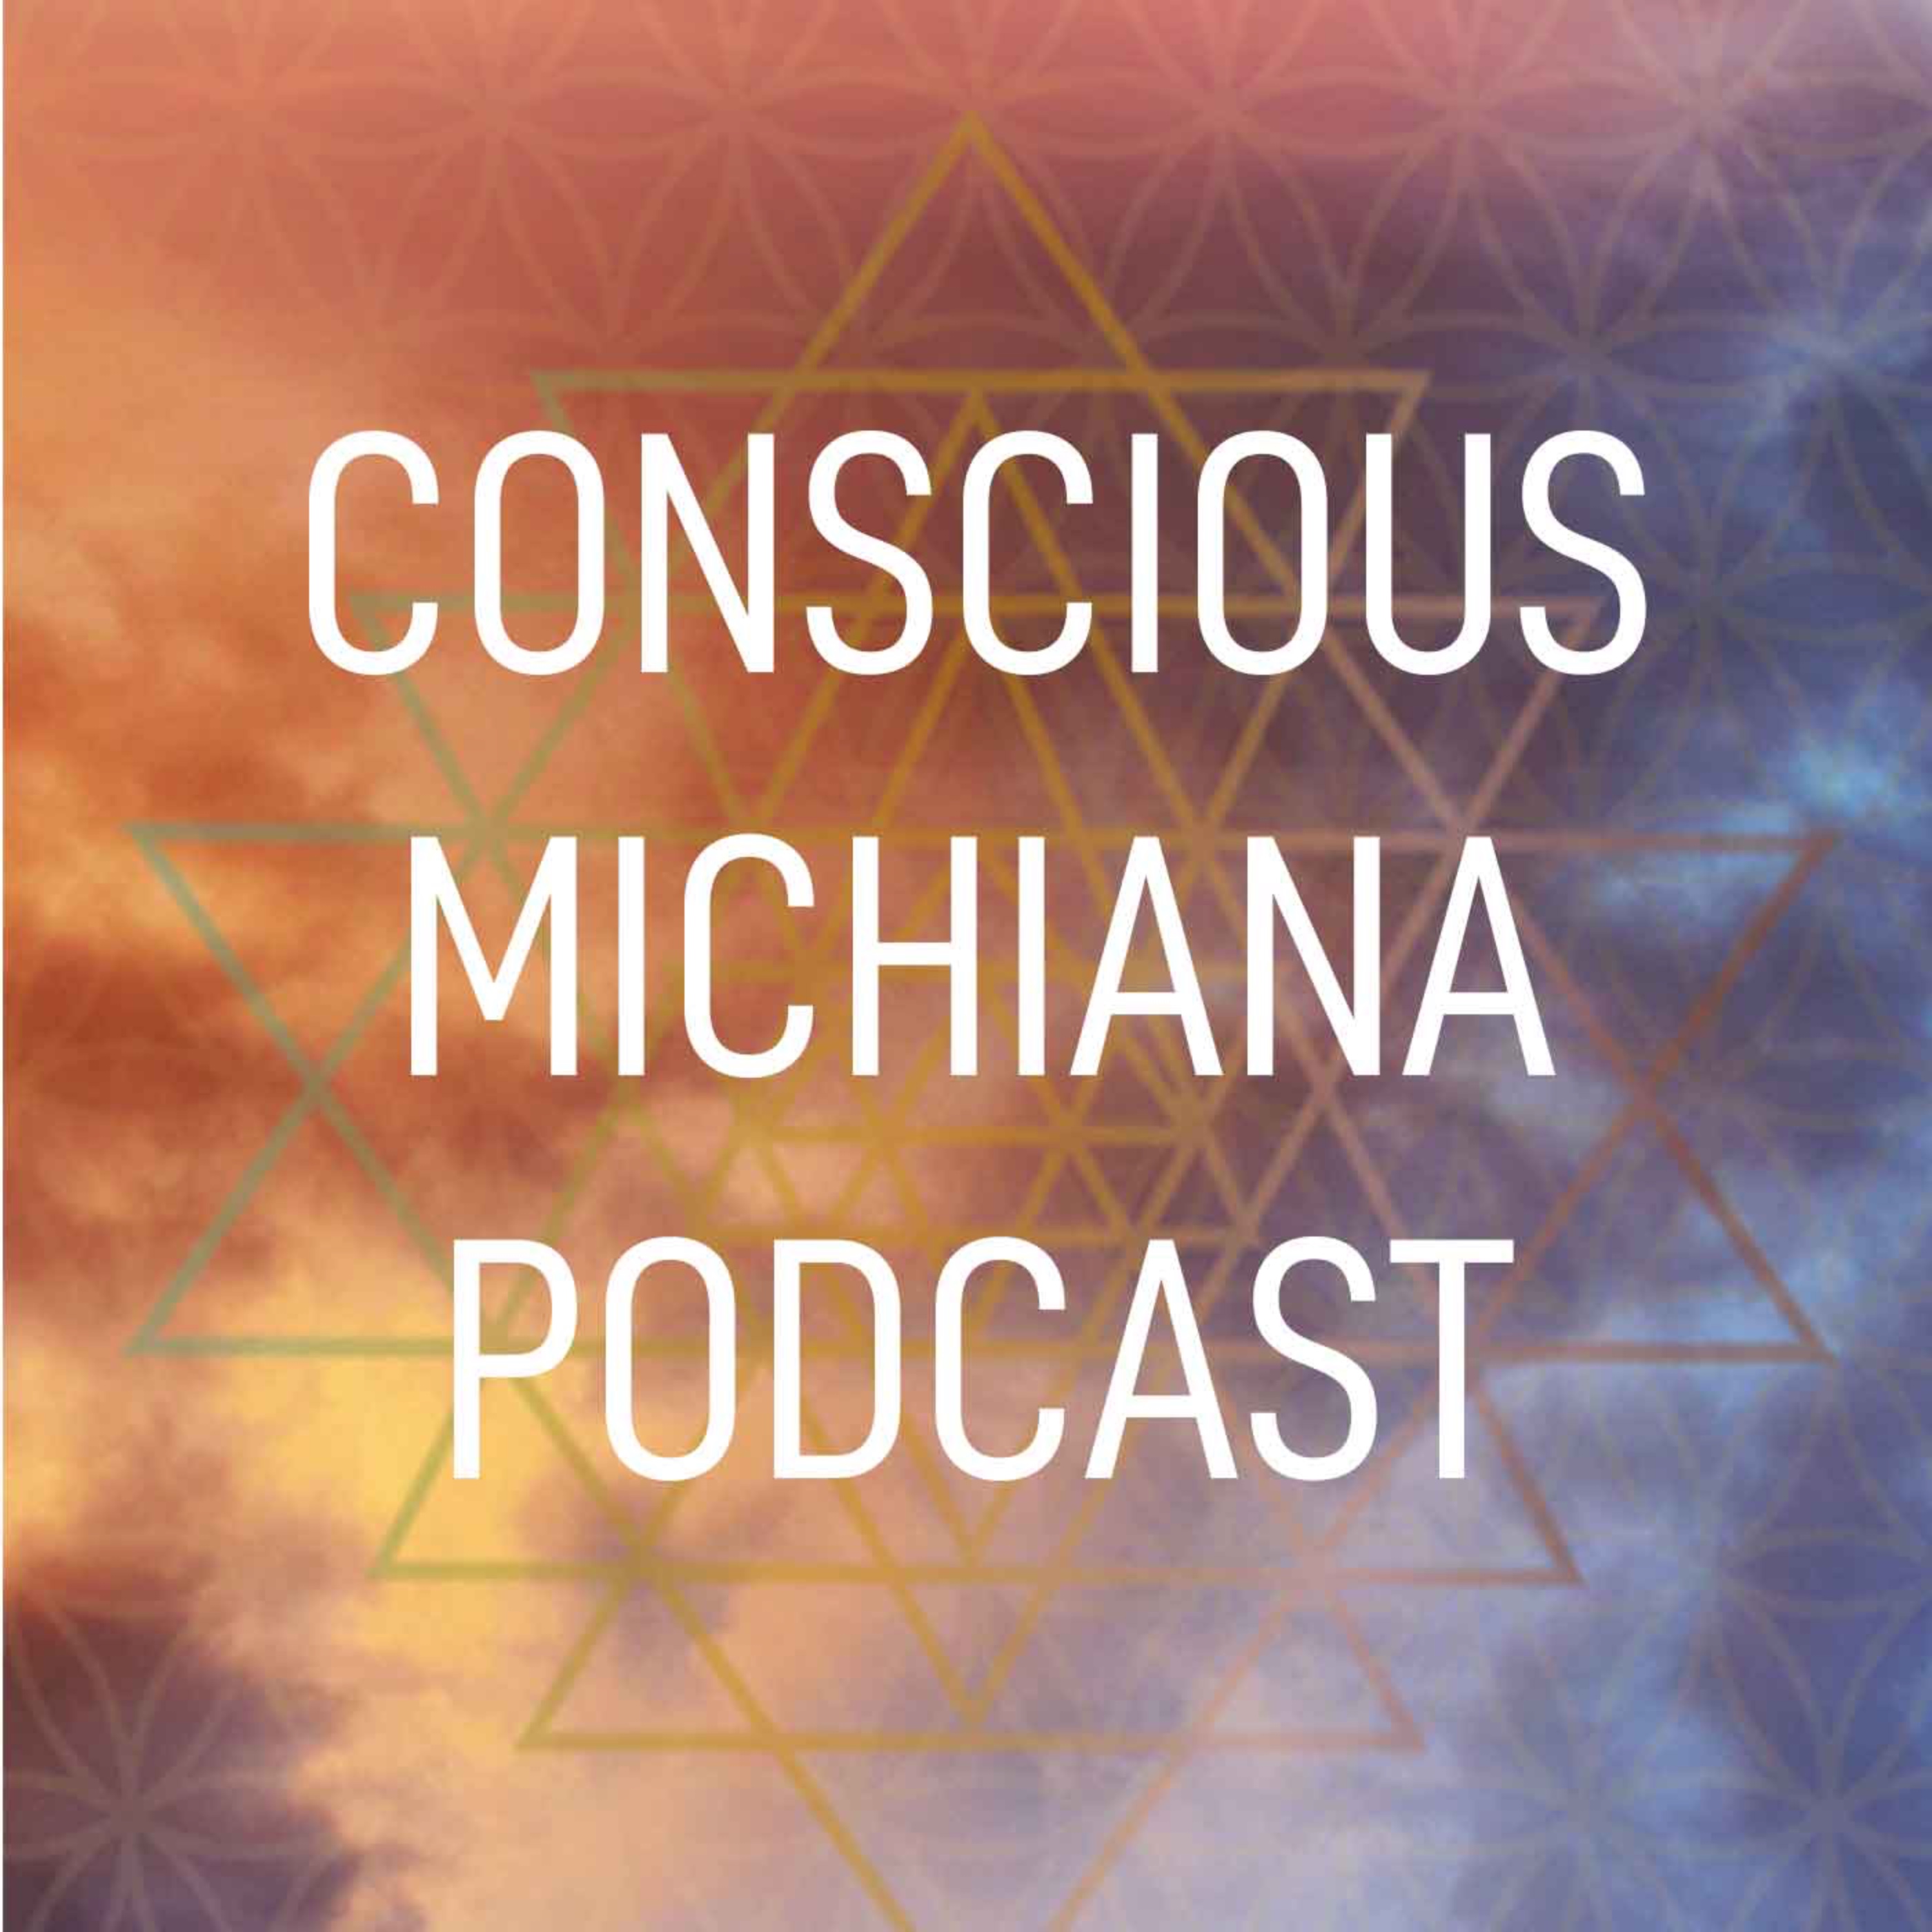 Conscious Michiana Podcast